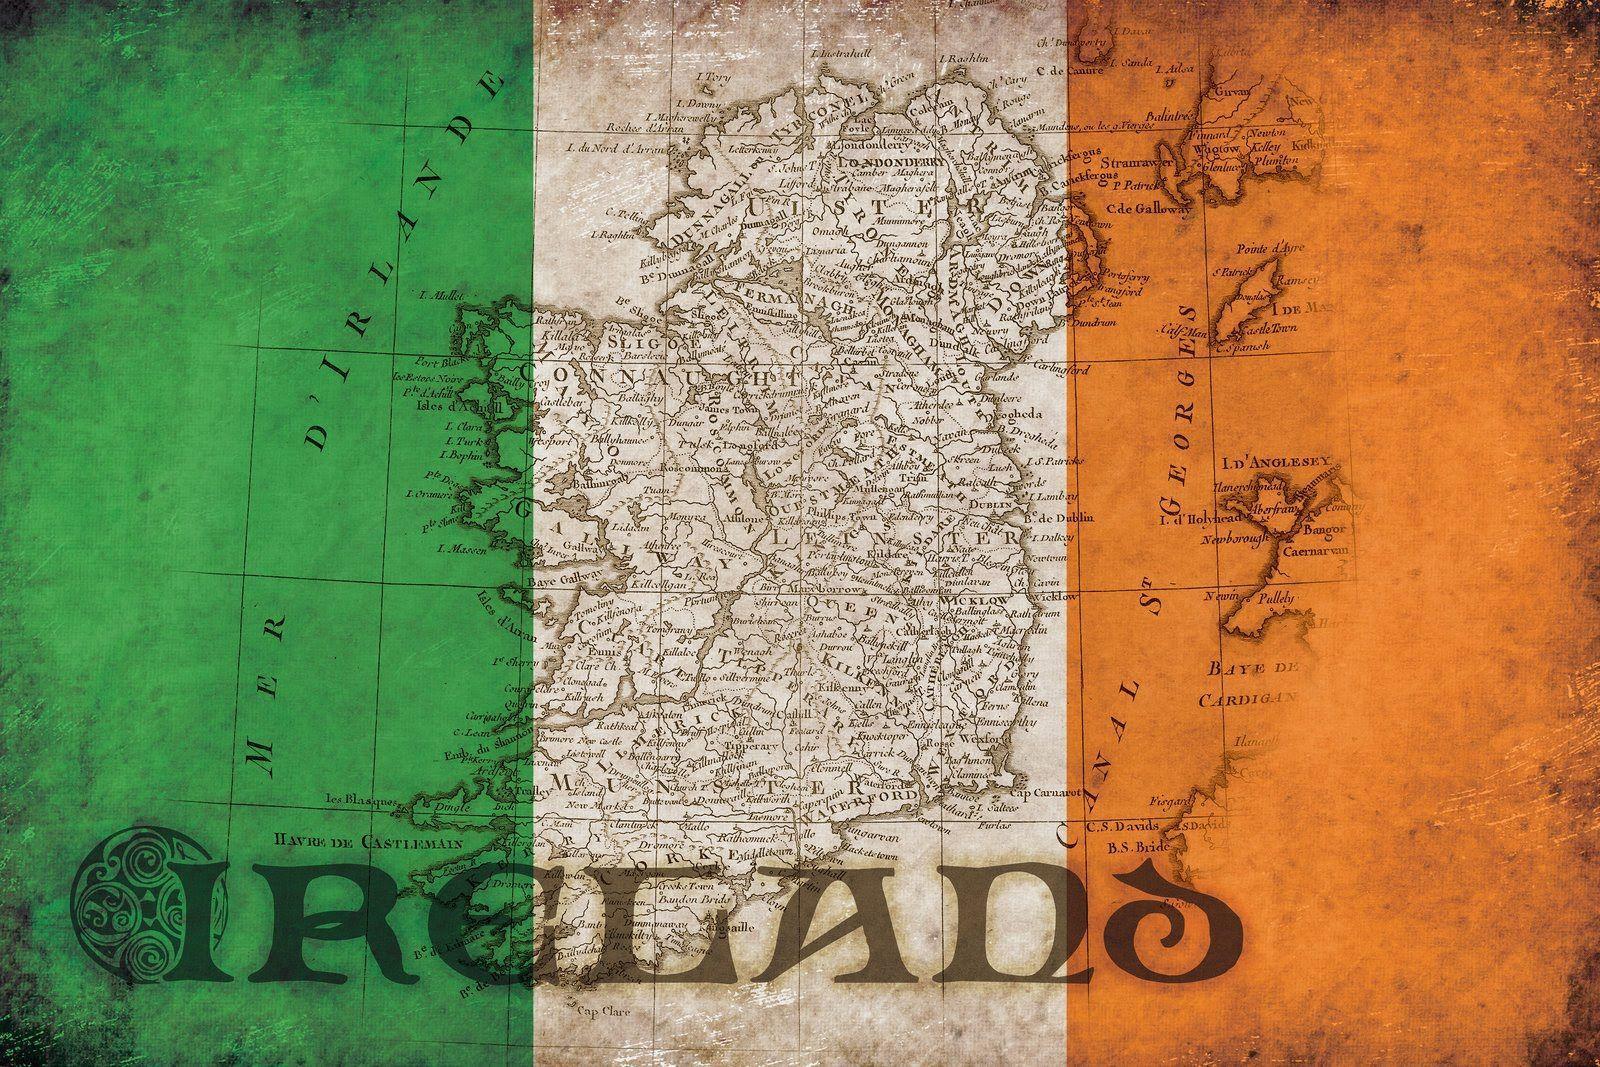 Irish & Celtic Music Collection 2